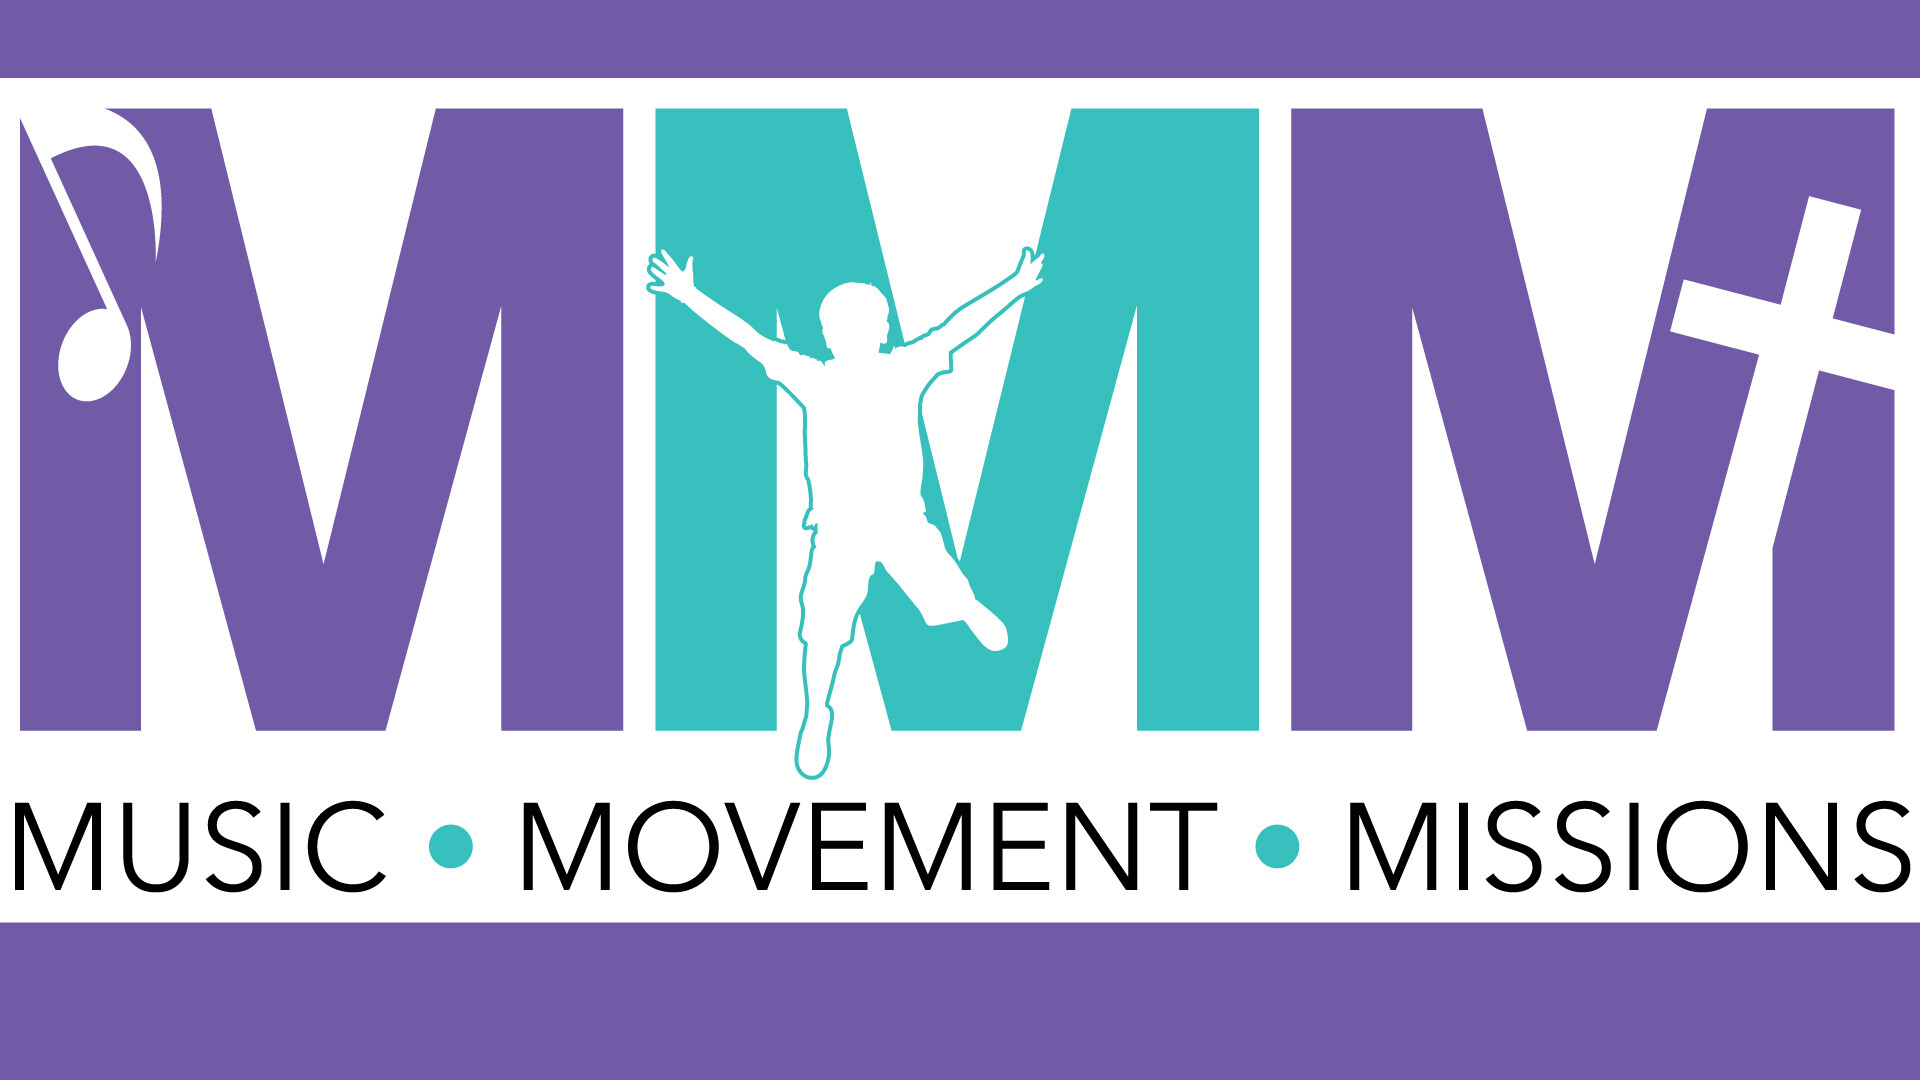 Children: Music, Movement & Missions